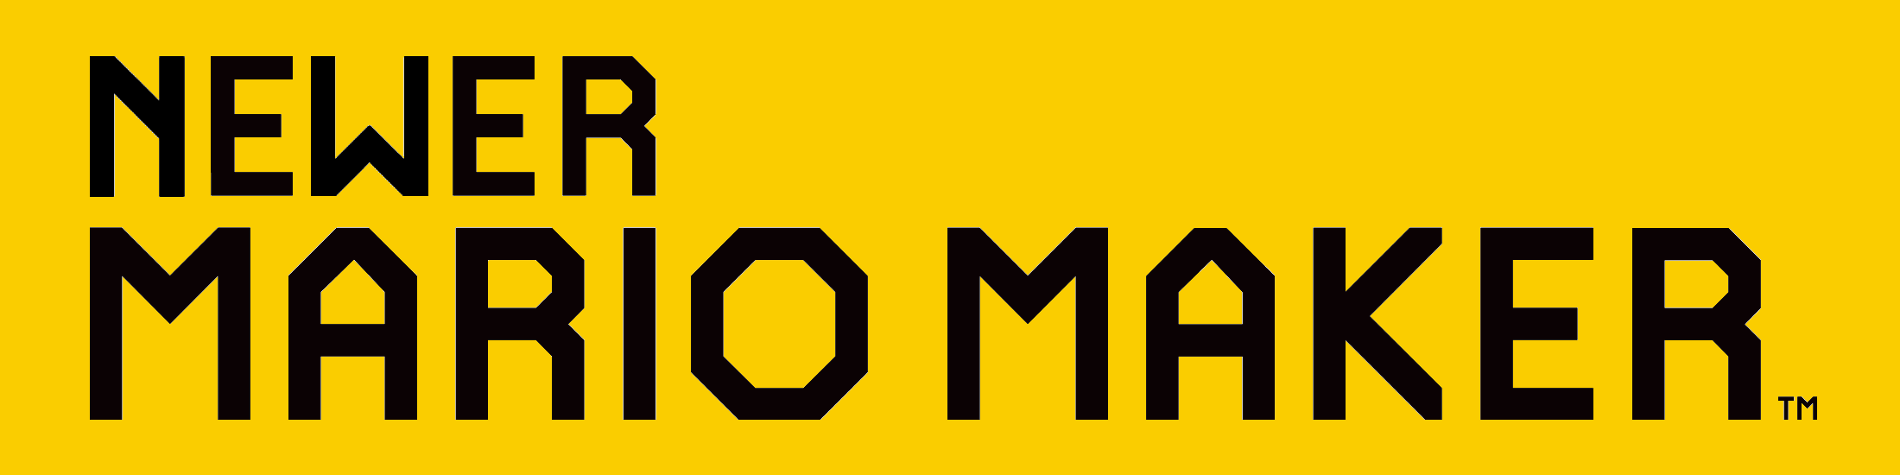 Super_Mario_Maker_logo.svg.png — 41.91 KiB, viewed 157 times